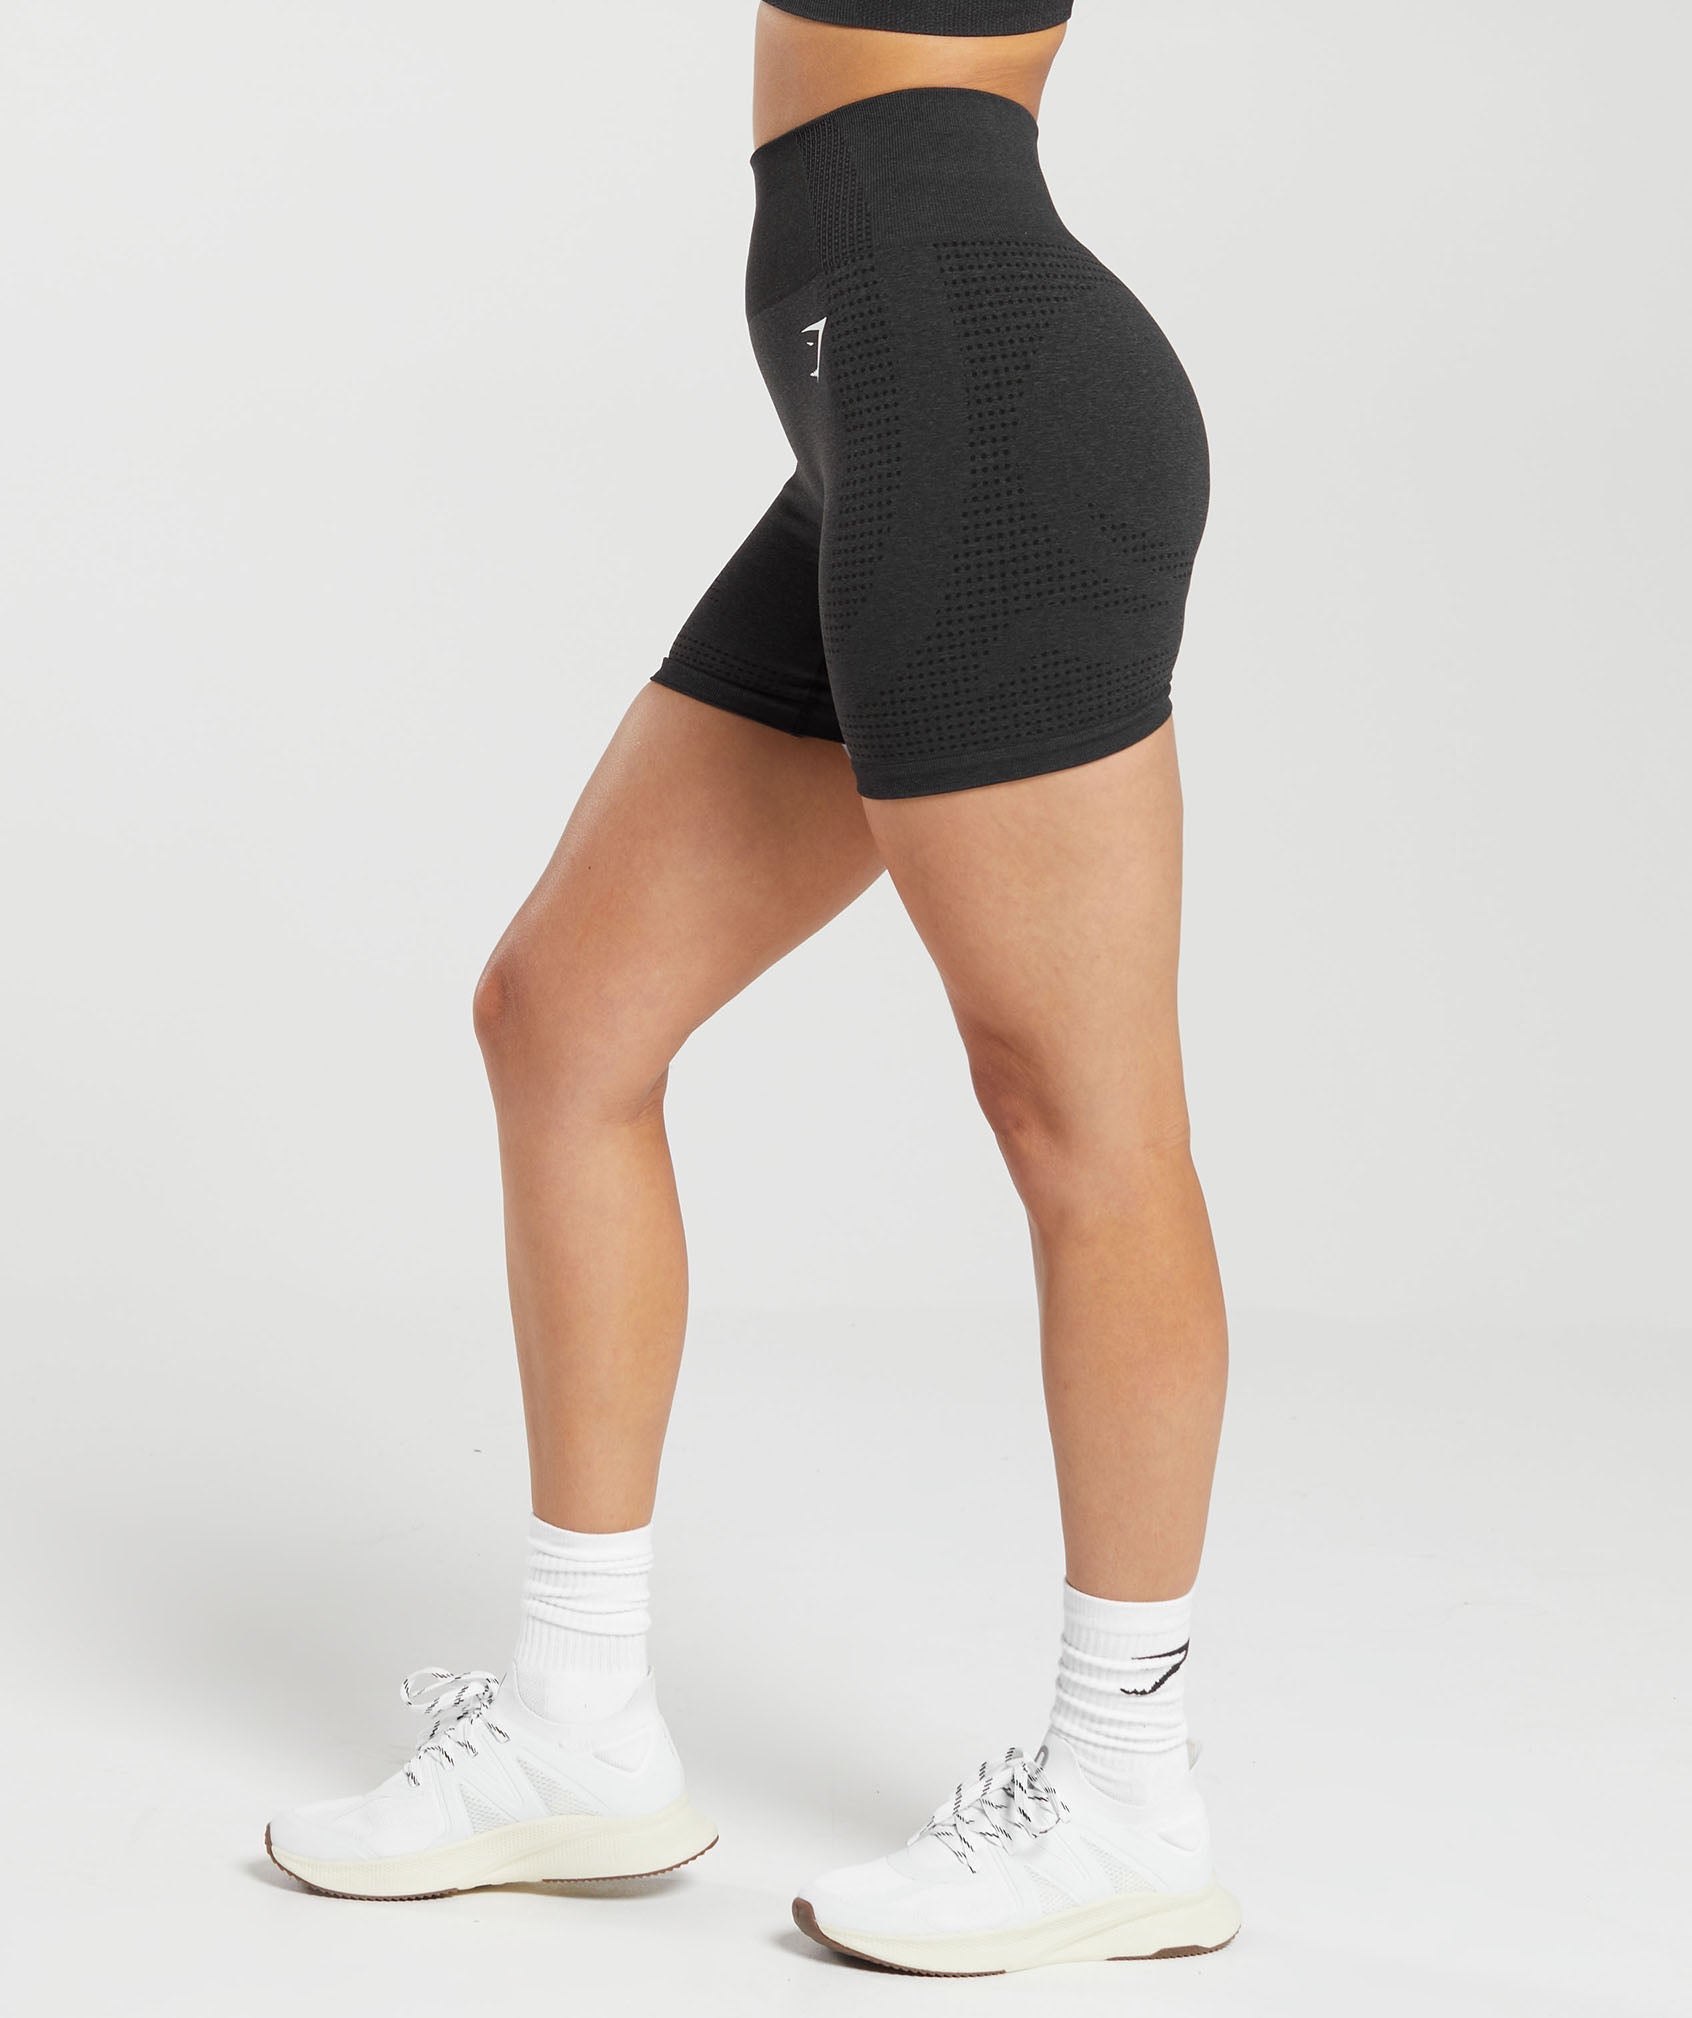 Vital Seamless 2.0 Shorts in Black Marl